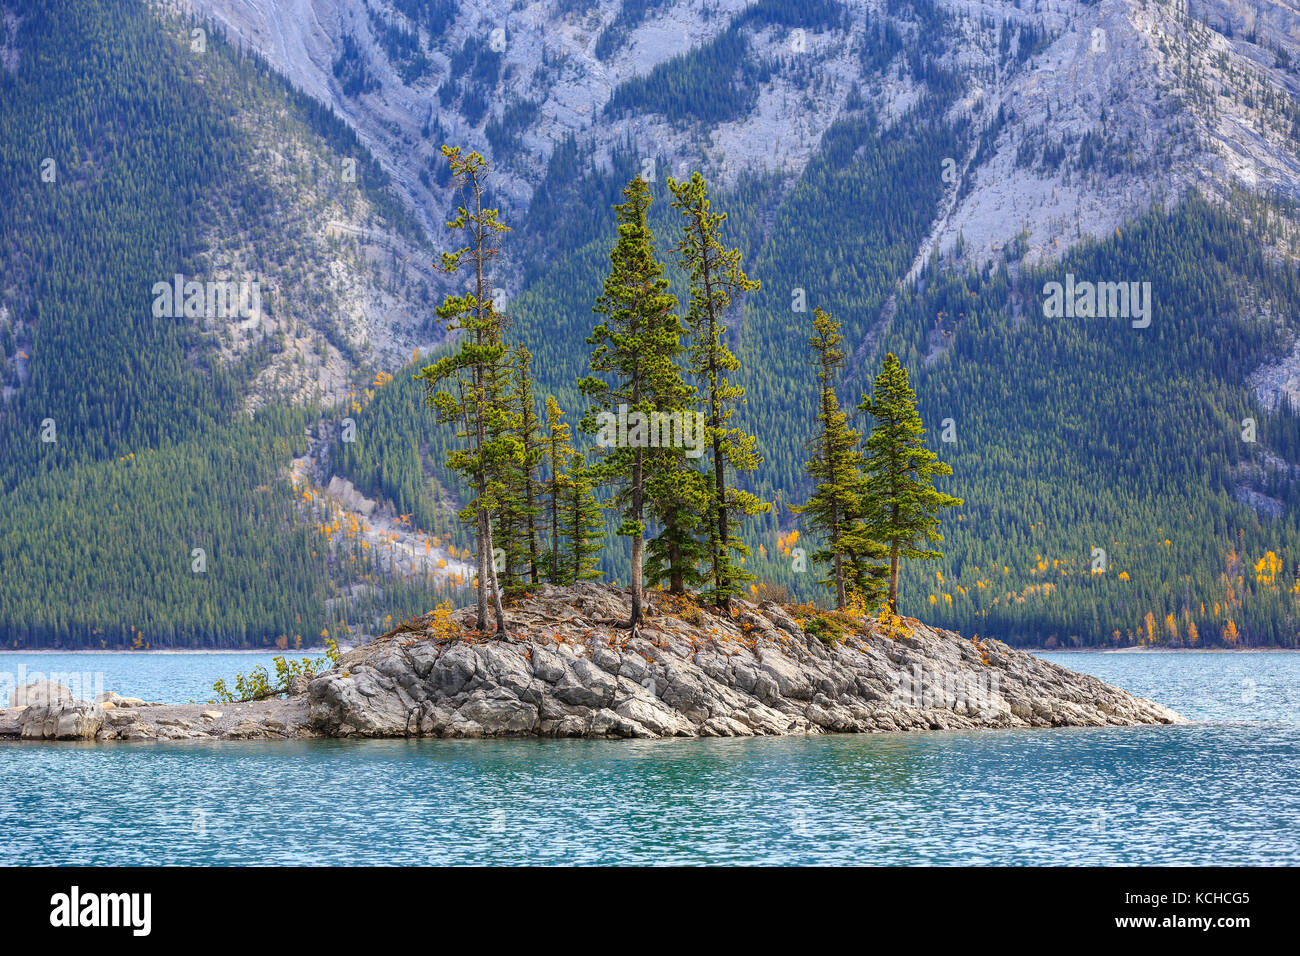 Rocky Island sur le lac Minnewanka, Banff National Park, Alberta, Canada Banque D'Images